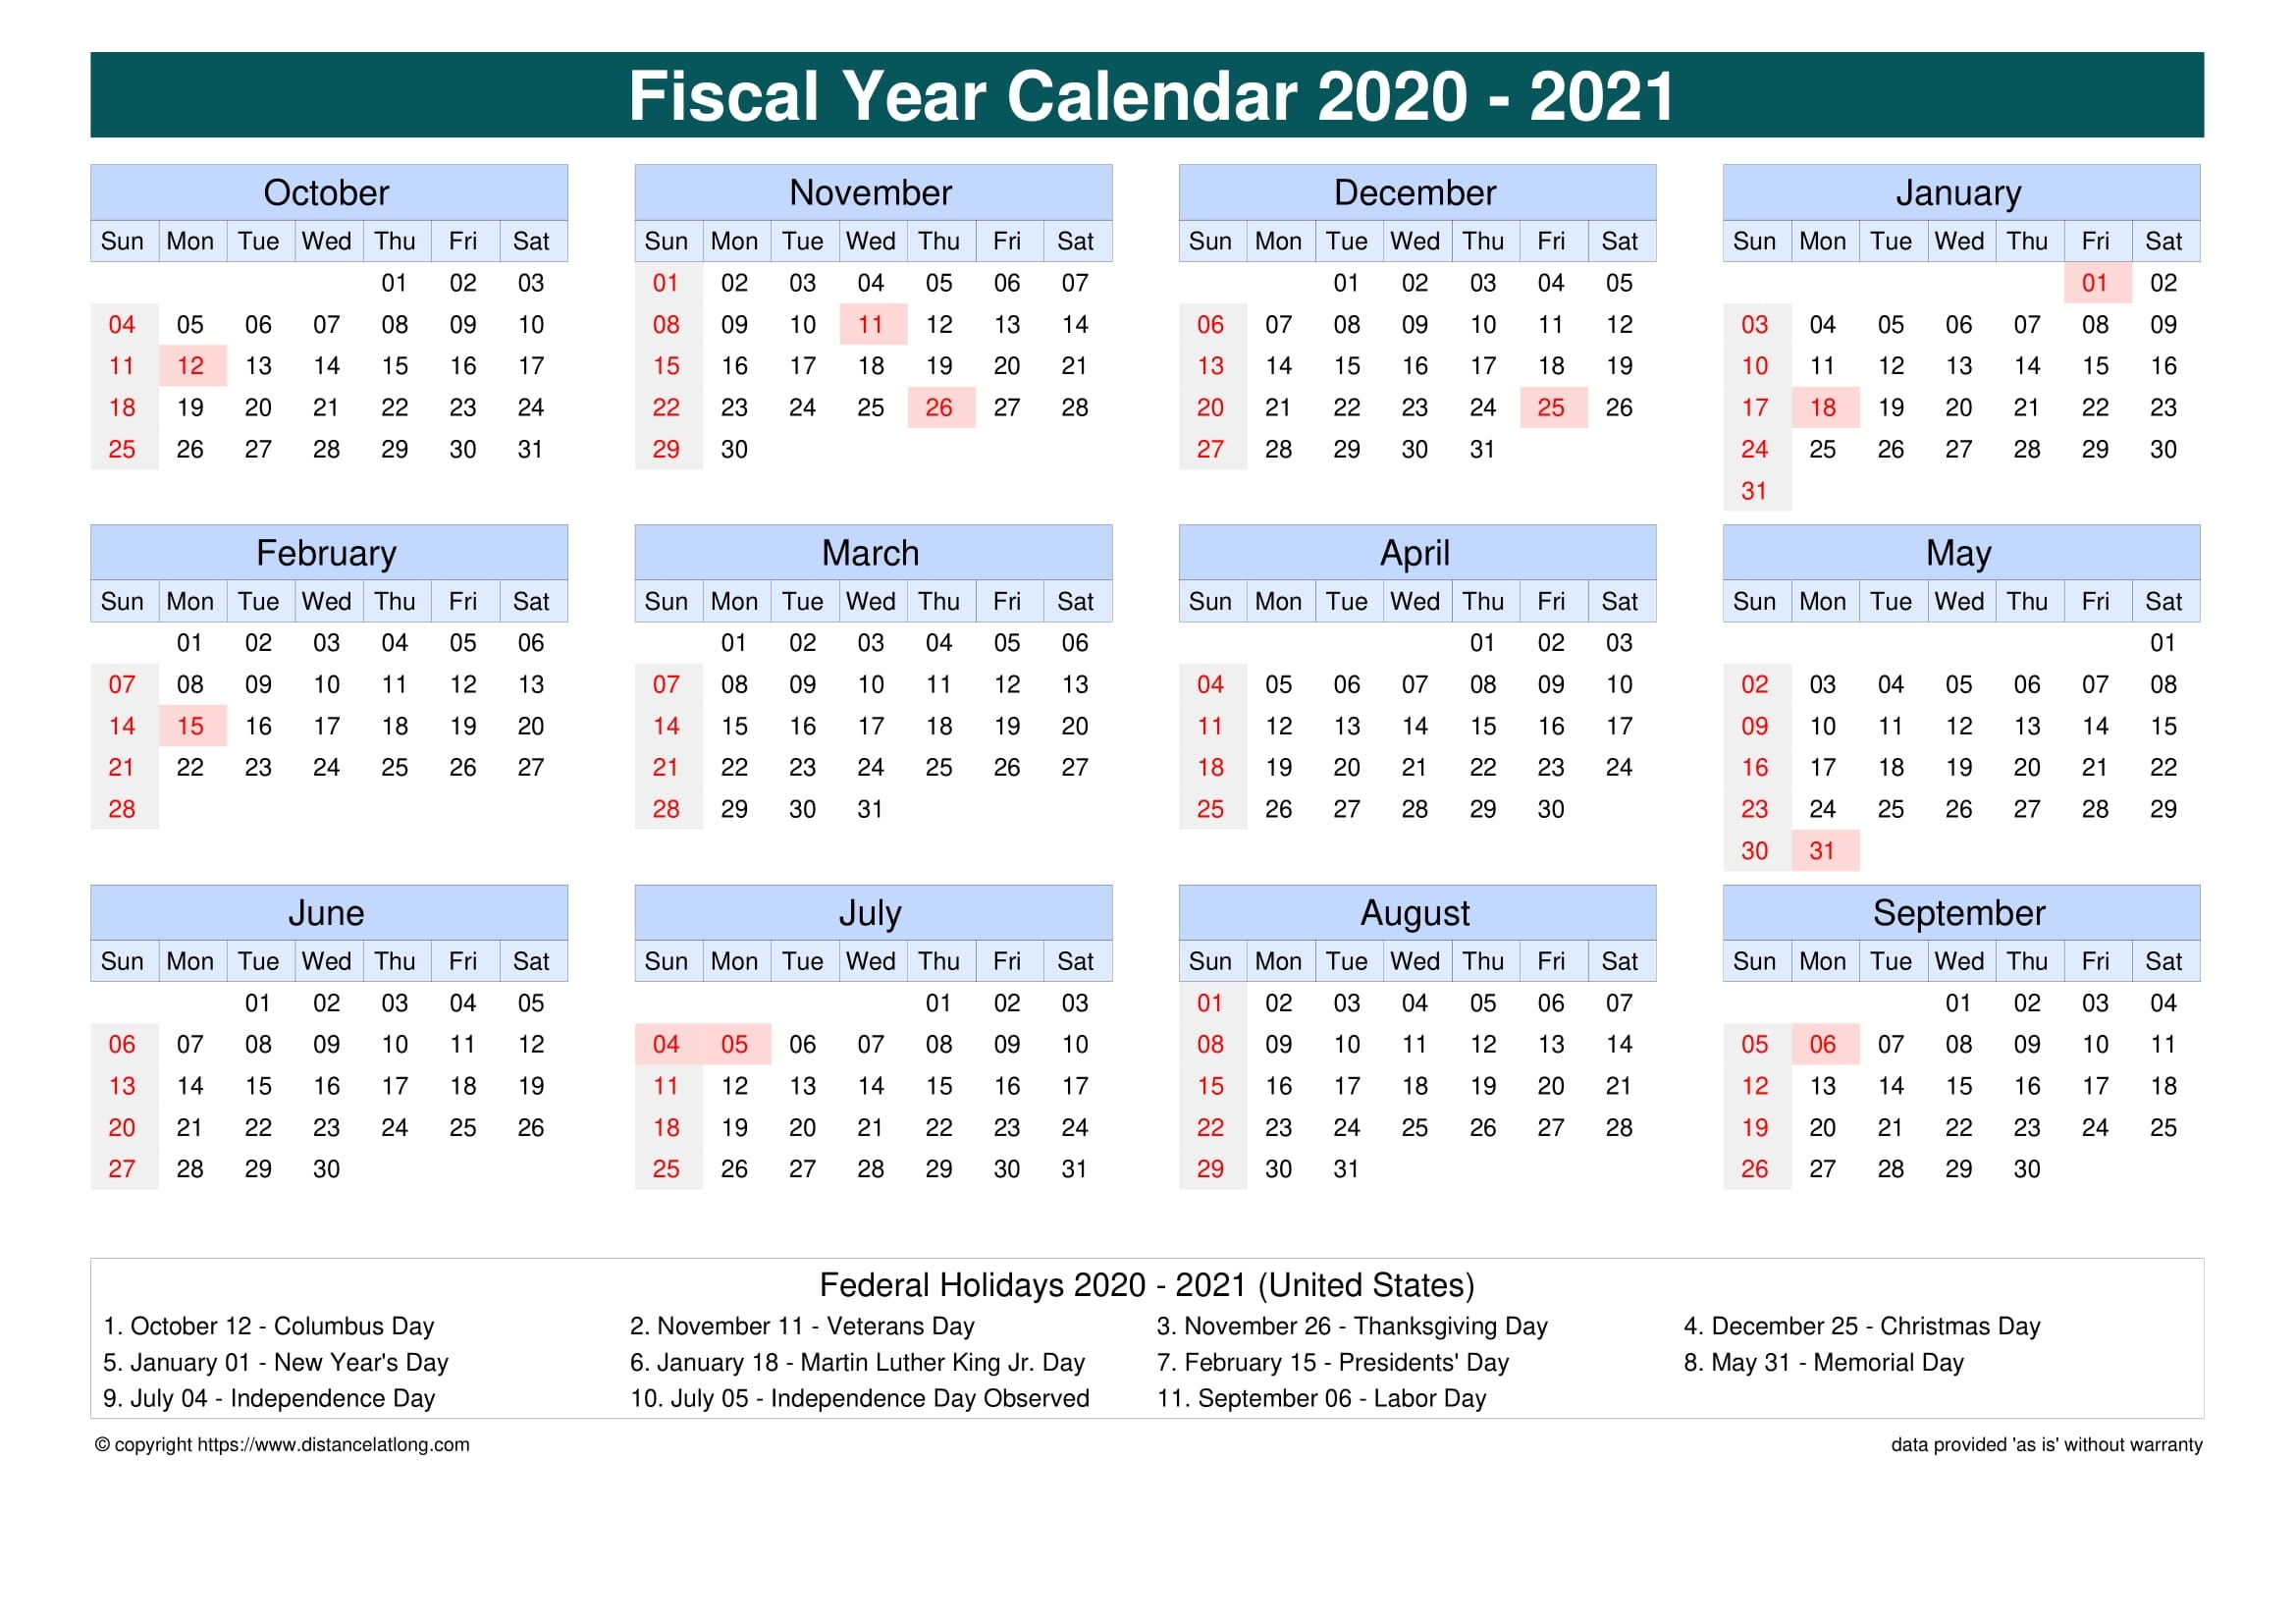 Fiscal Year 2020-2021 Calendar Templates, Free Printable